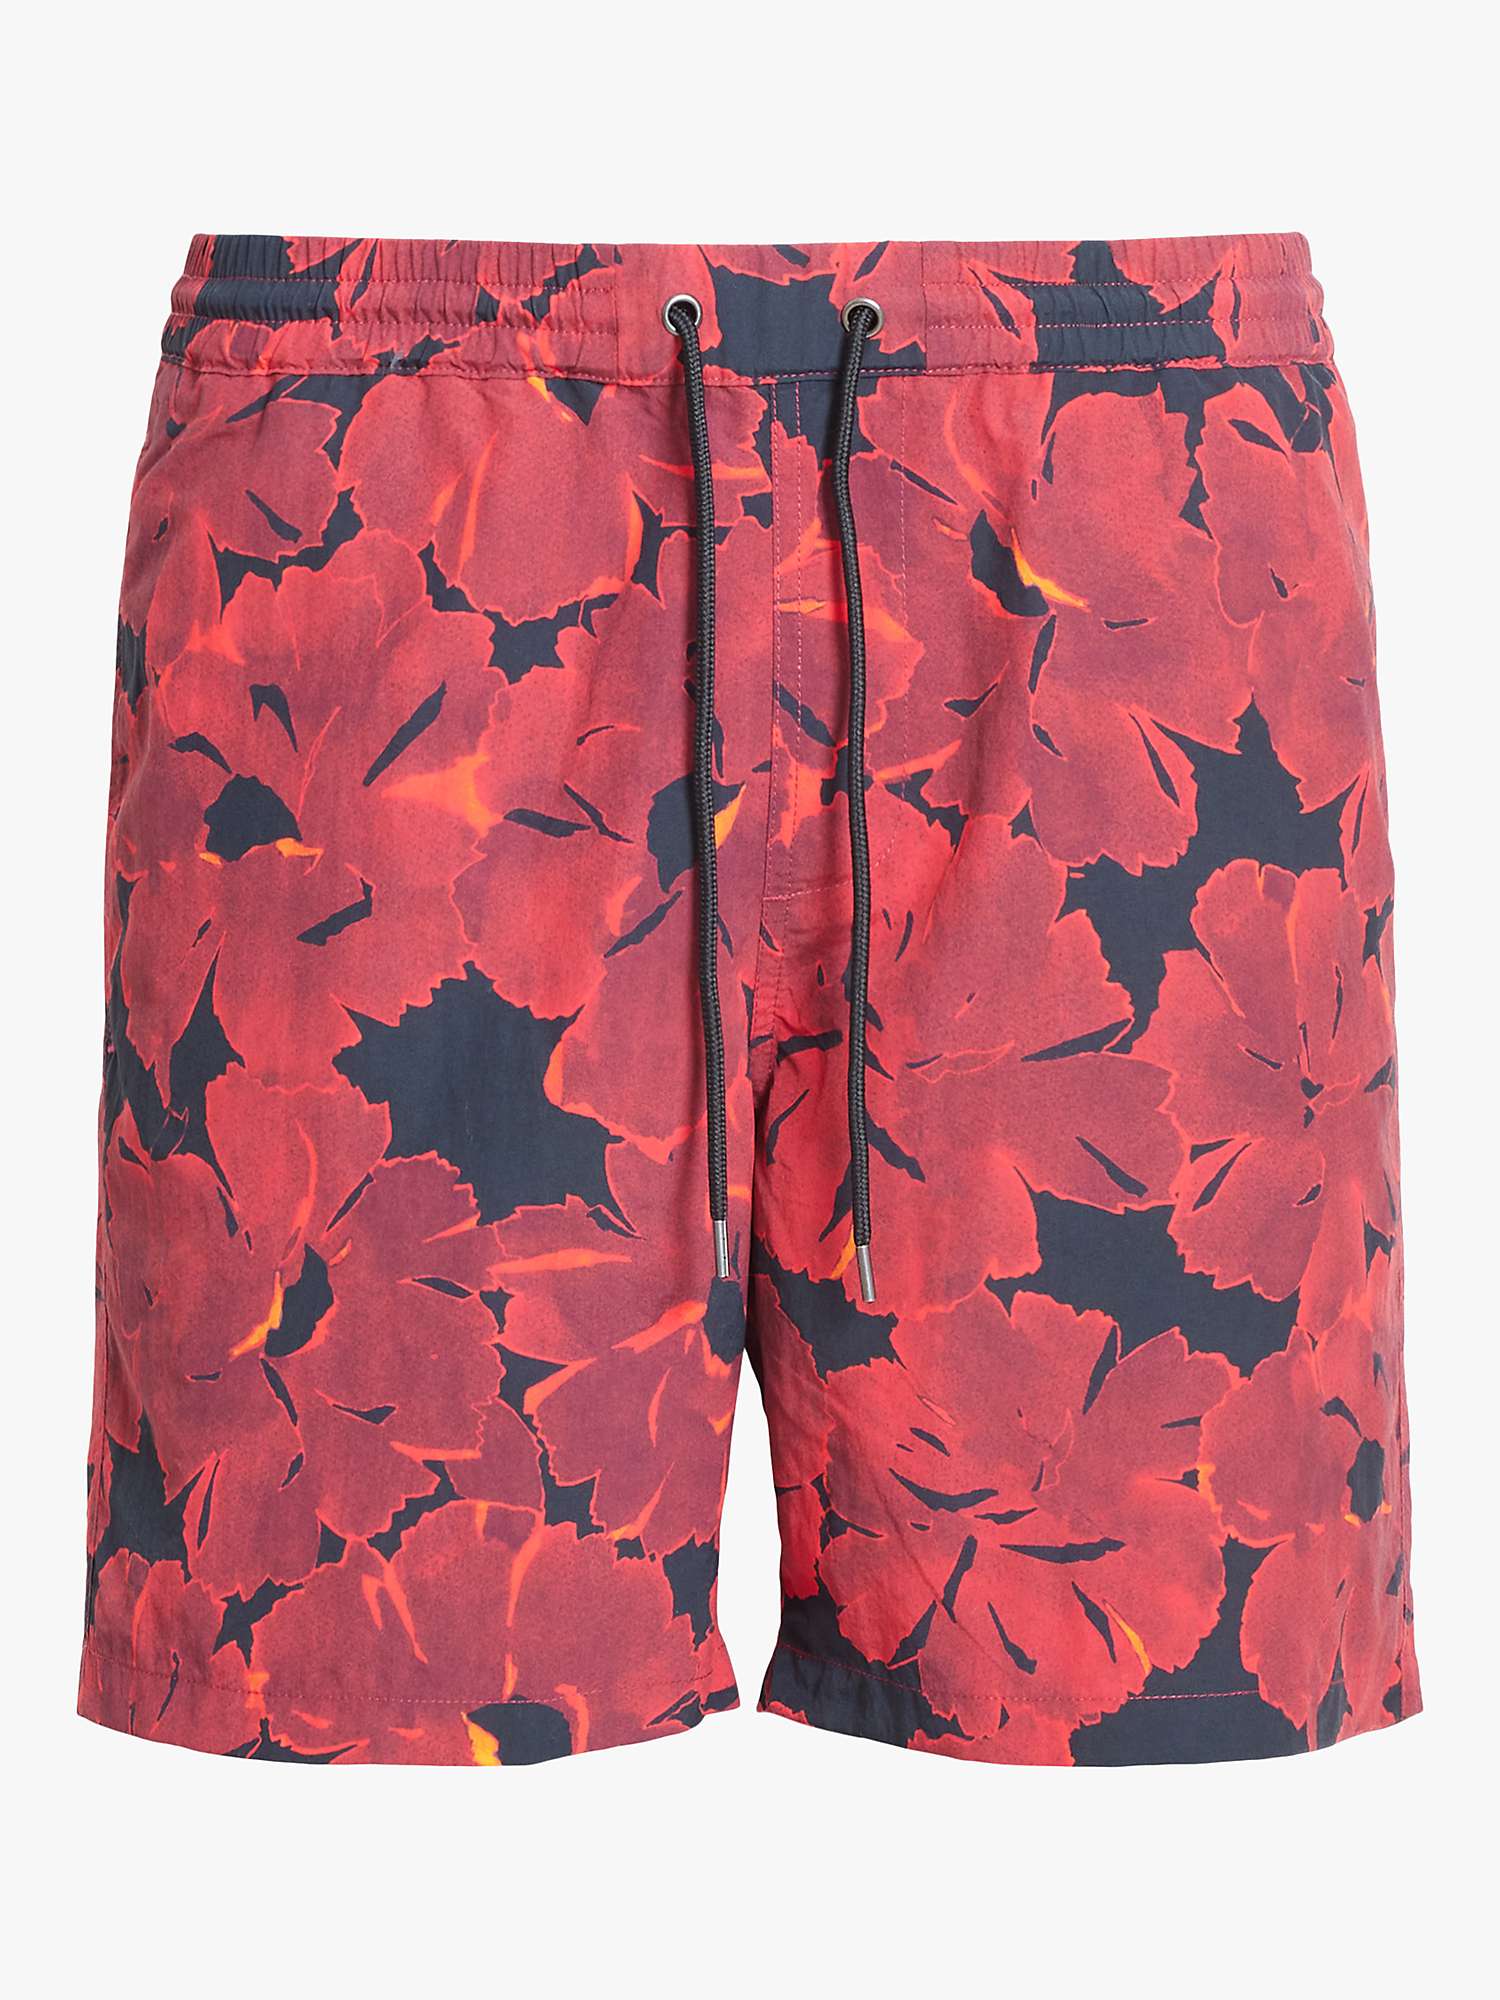 Buy AllSaints Kaza Swim Shorts, Red/Black Online at johnlewis.com